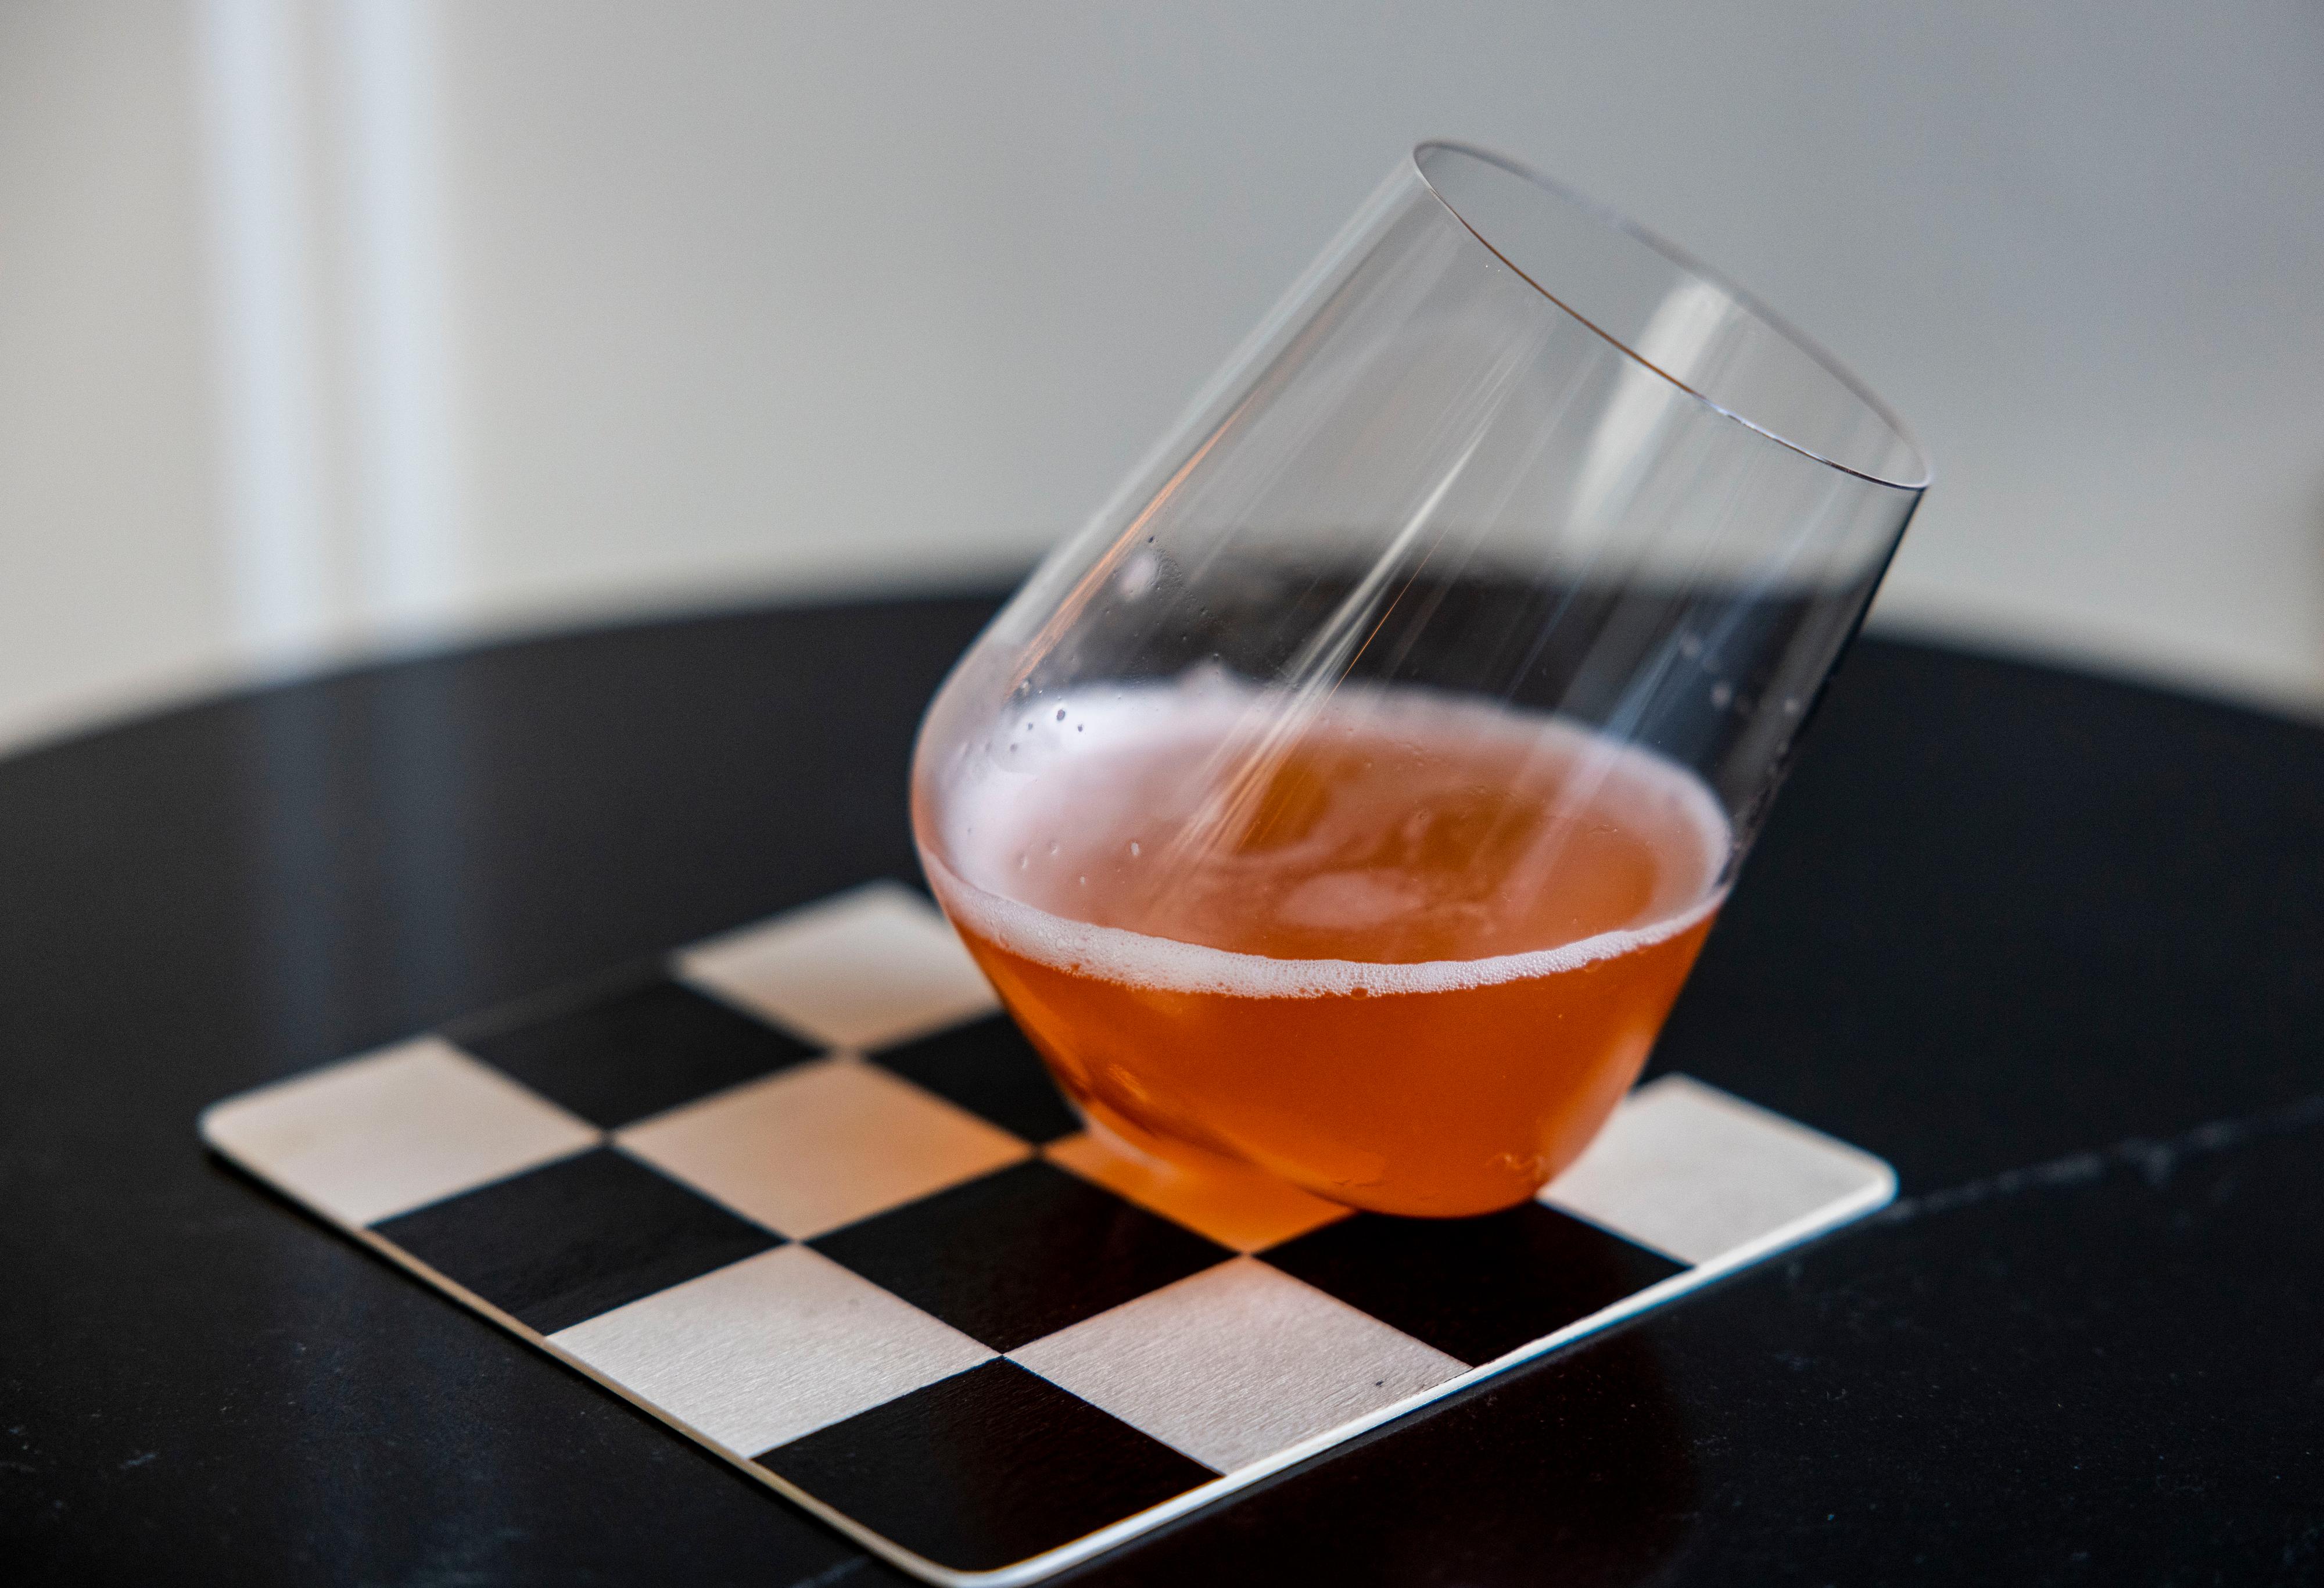 Et glass med en rød cocktail som heter Equality